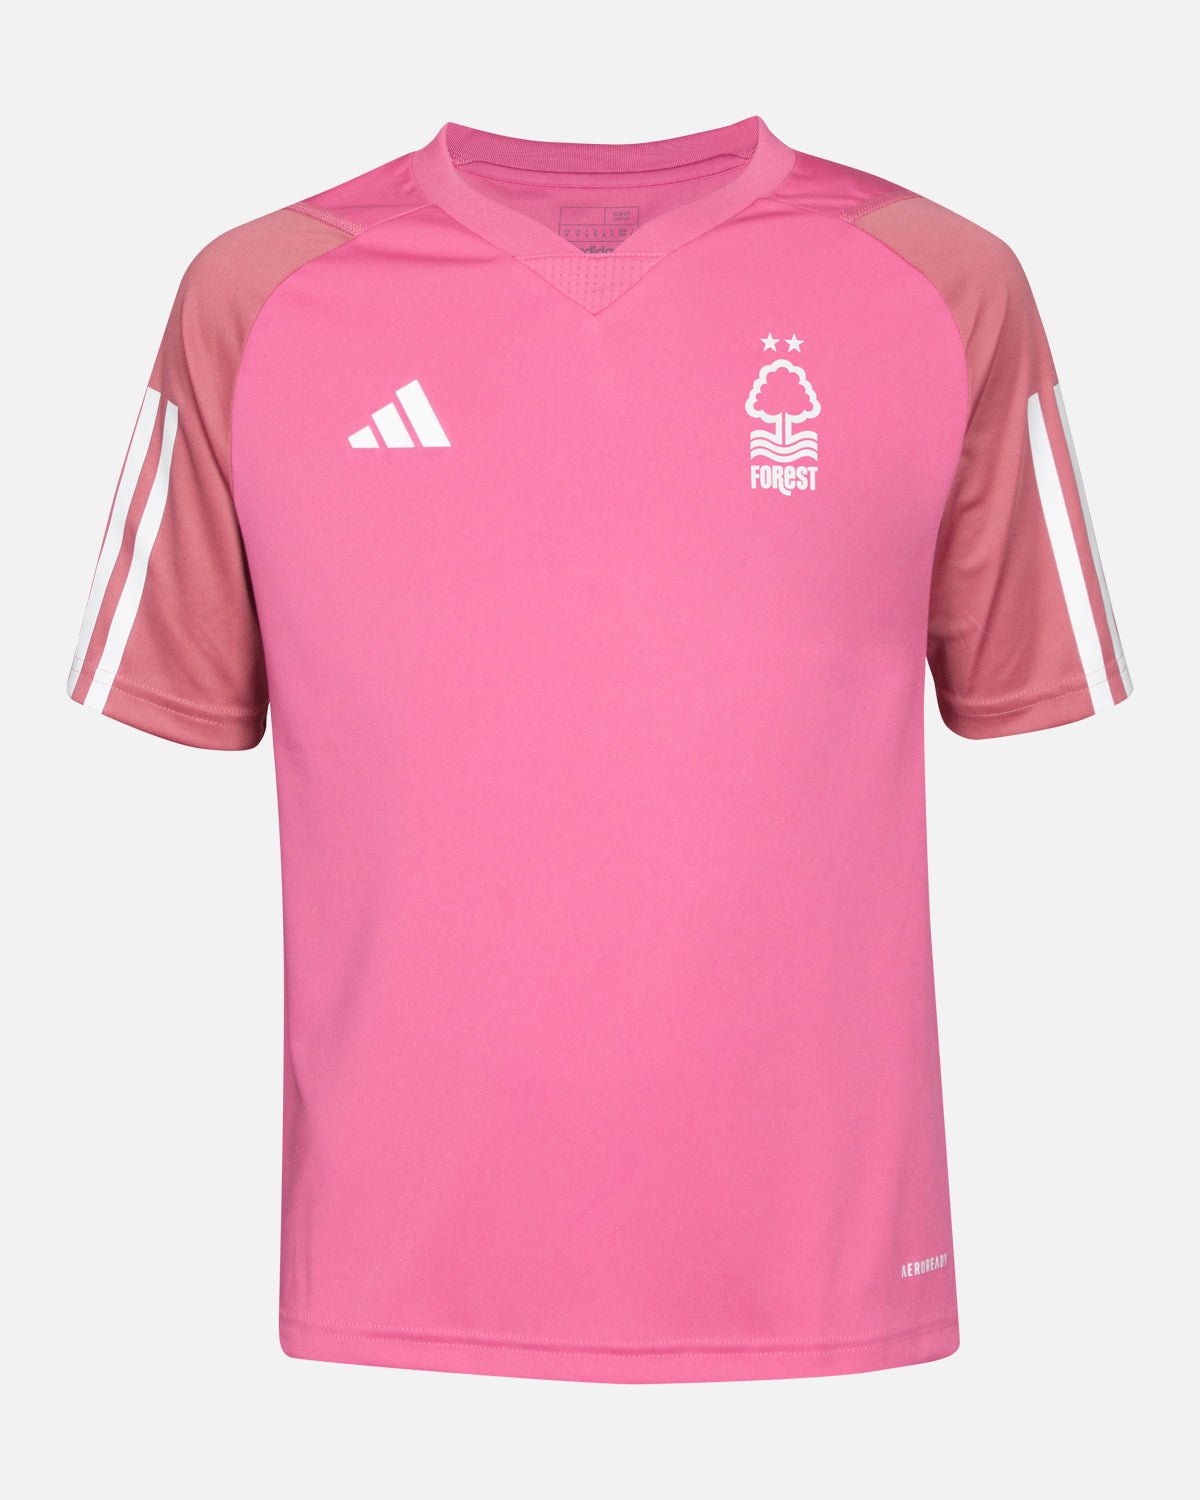 NFFC Junior Pink Warm Up Jersey 23-24 - Nottingham Forest FC